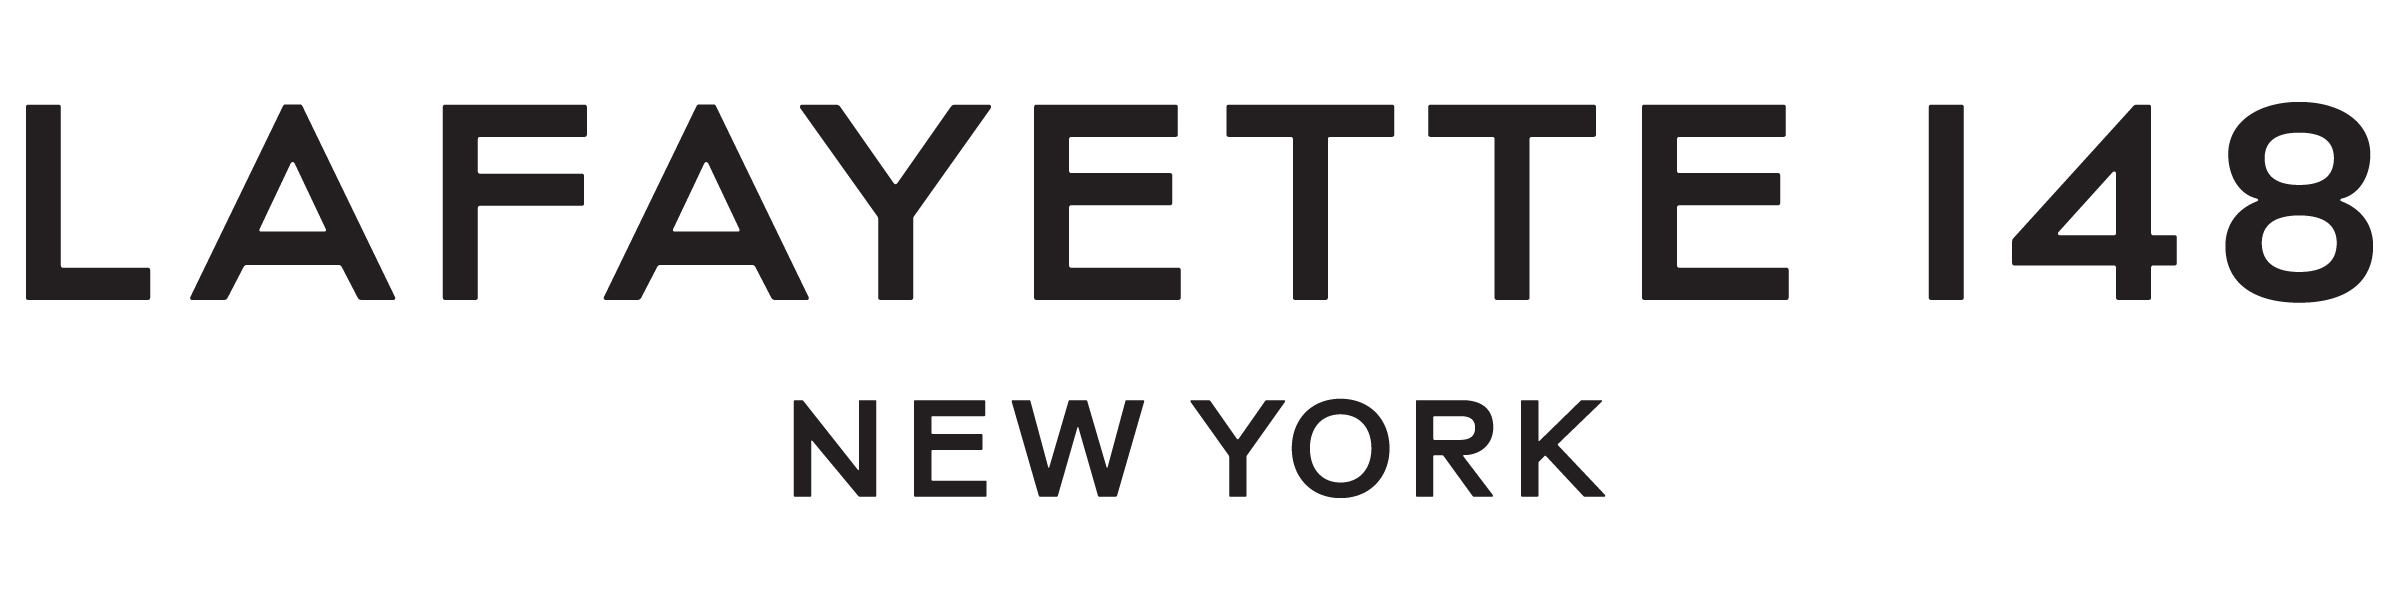 Lafayette 148 New York Logo